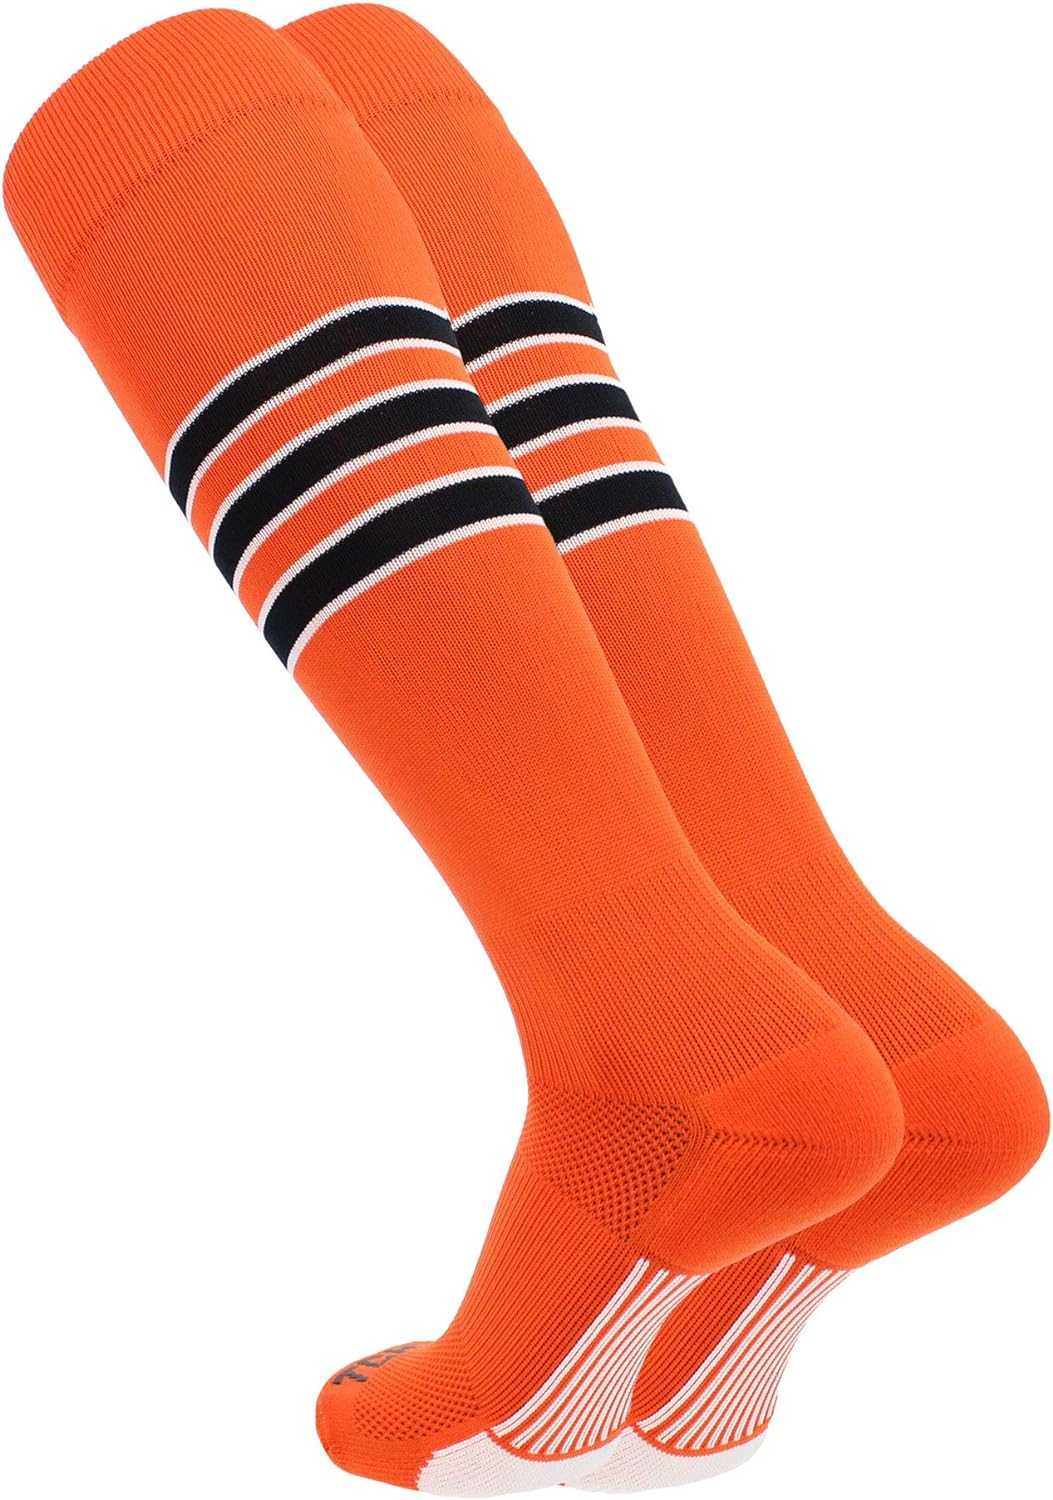 TCK Dugout Knee High Socks - Orange White Black - HIT a Double - 1